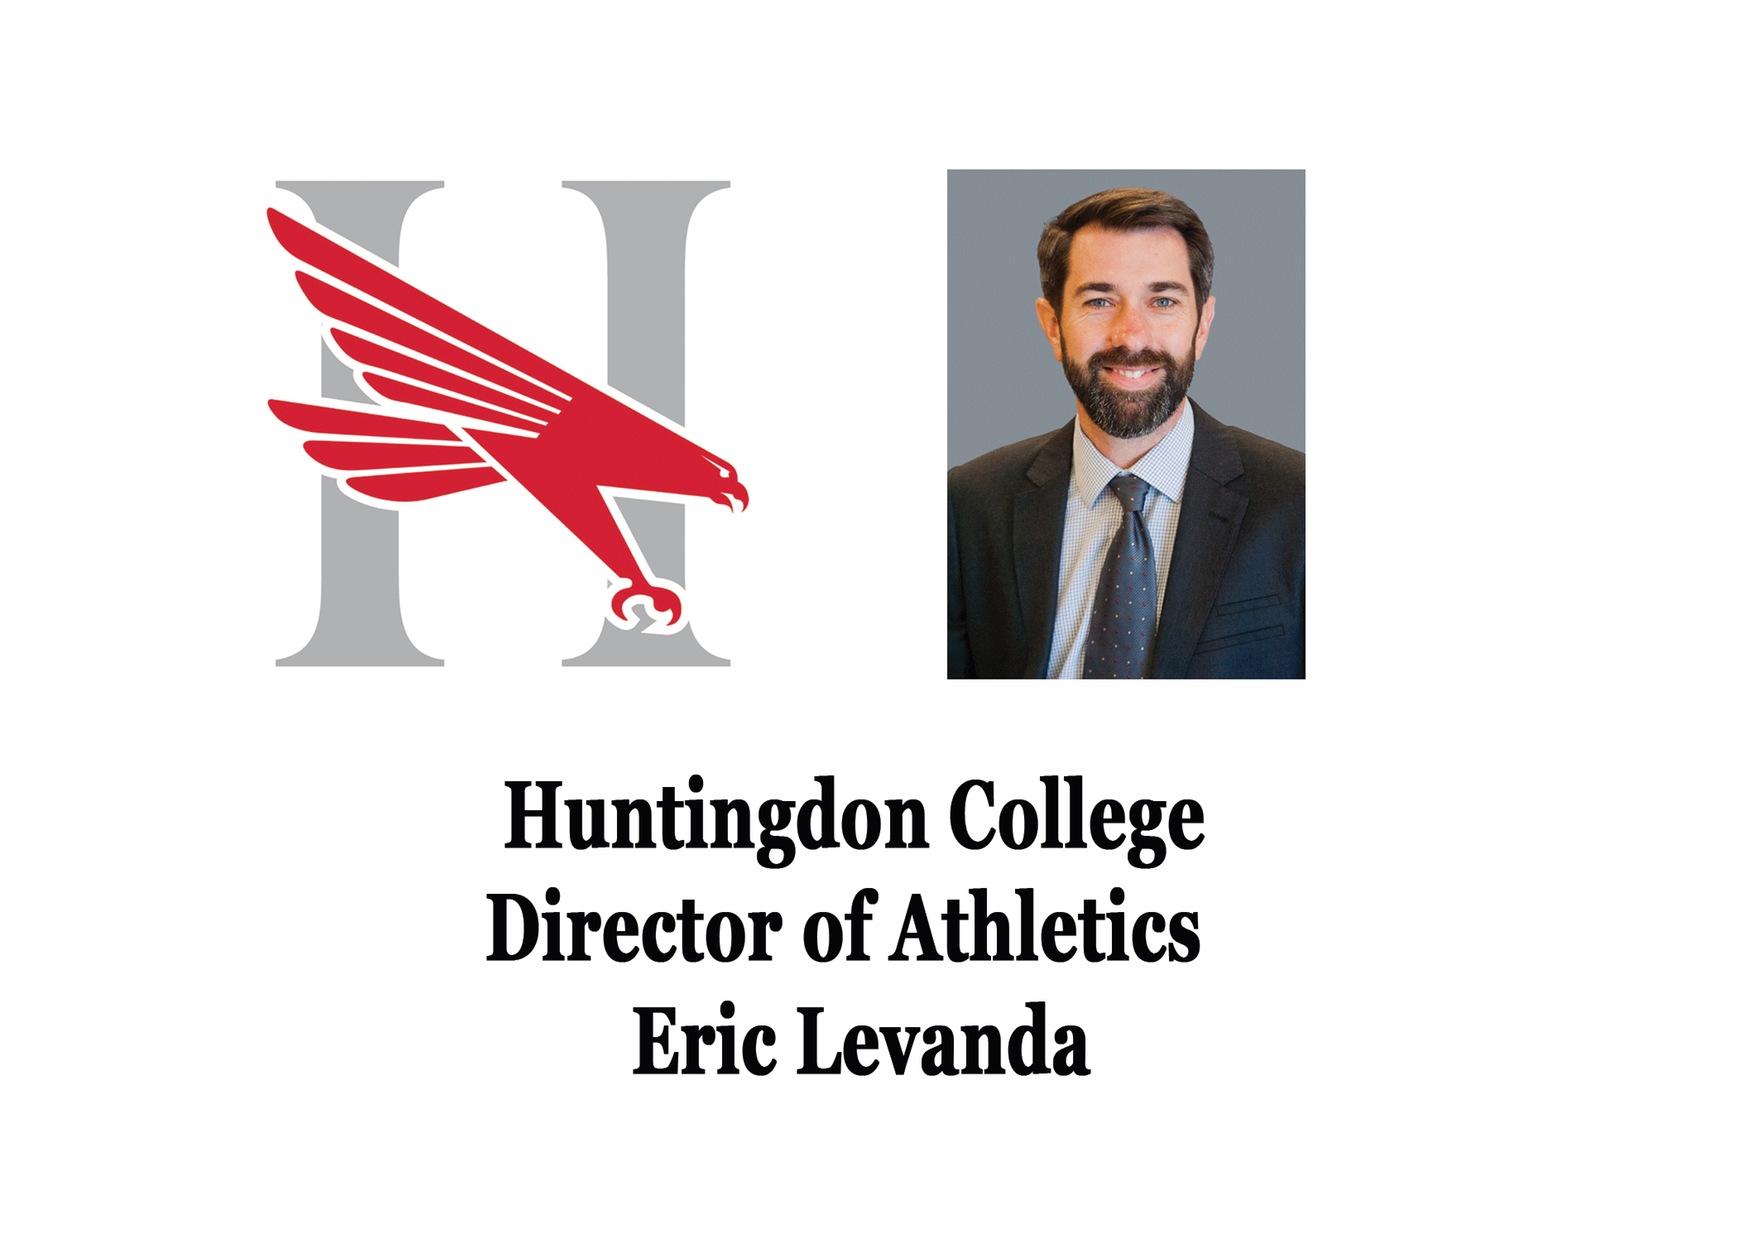 Levanda named Director of Athletics